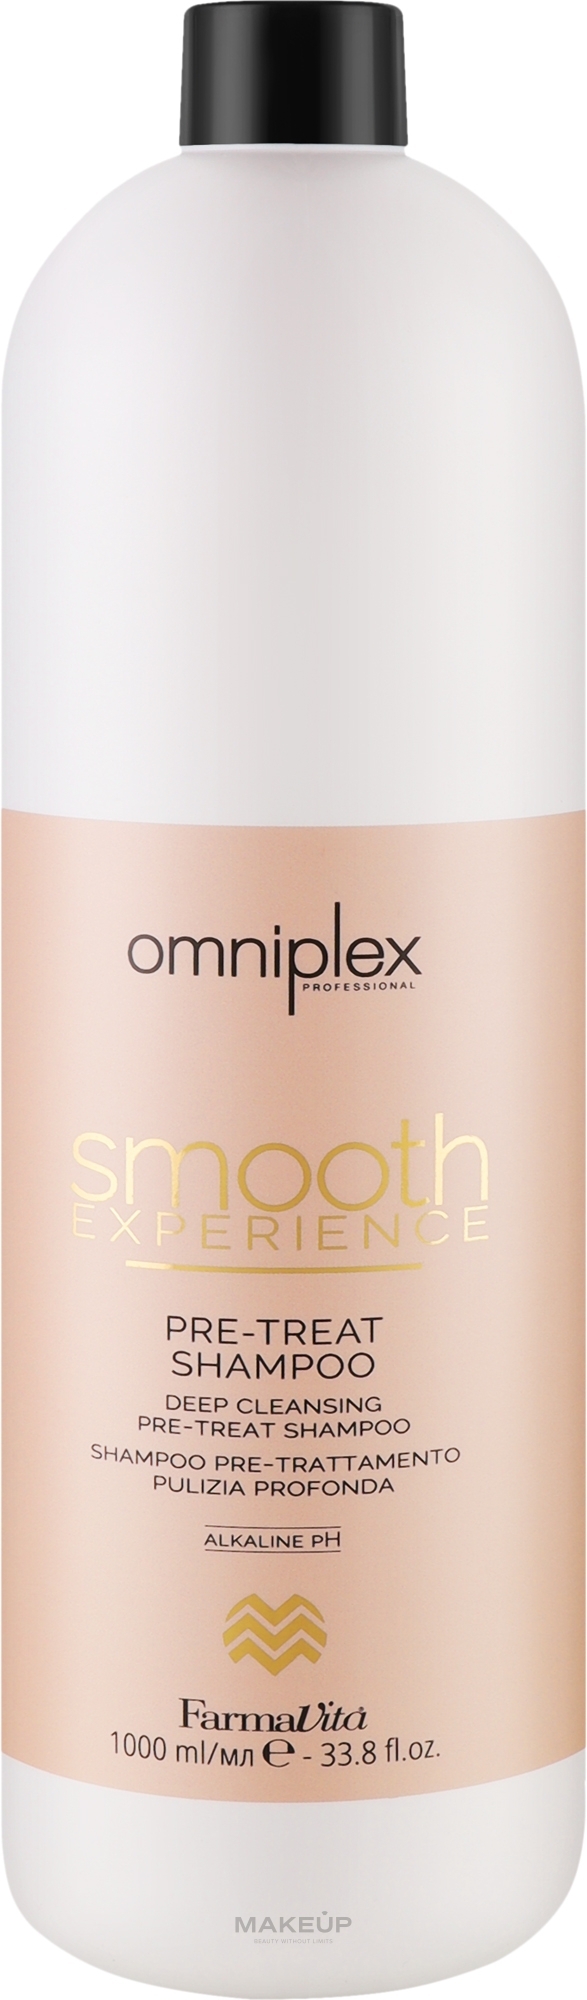 Щелочной шампунь глубокой очистки - FarmavVita Omniplex Smooth Experience Pre-Treat Shampoo — фото 1000ml